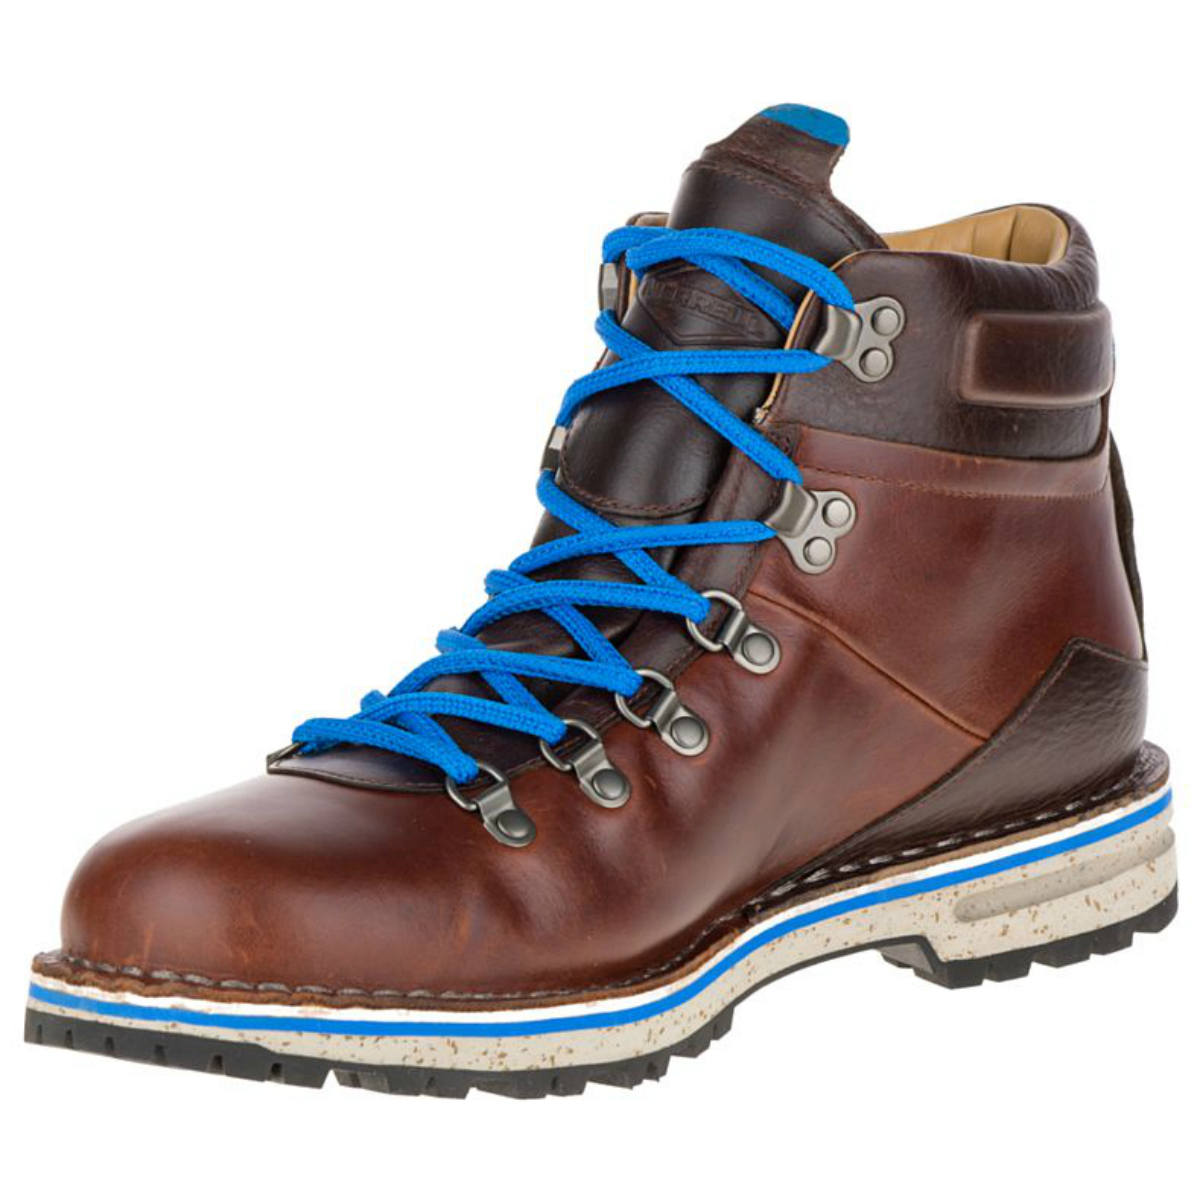 merrell sugarbush hiking boots